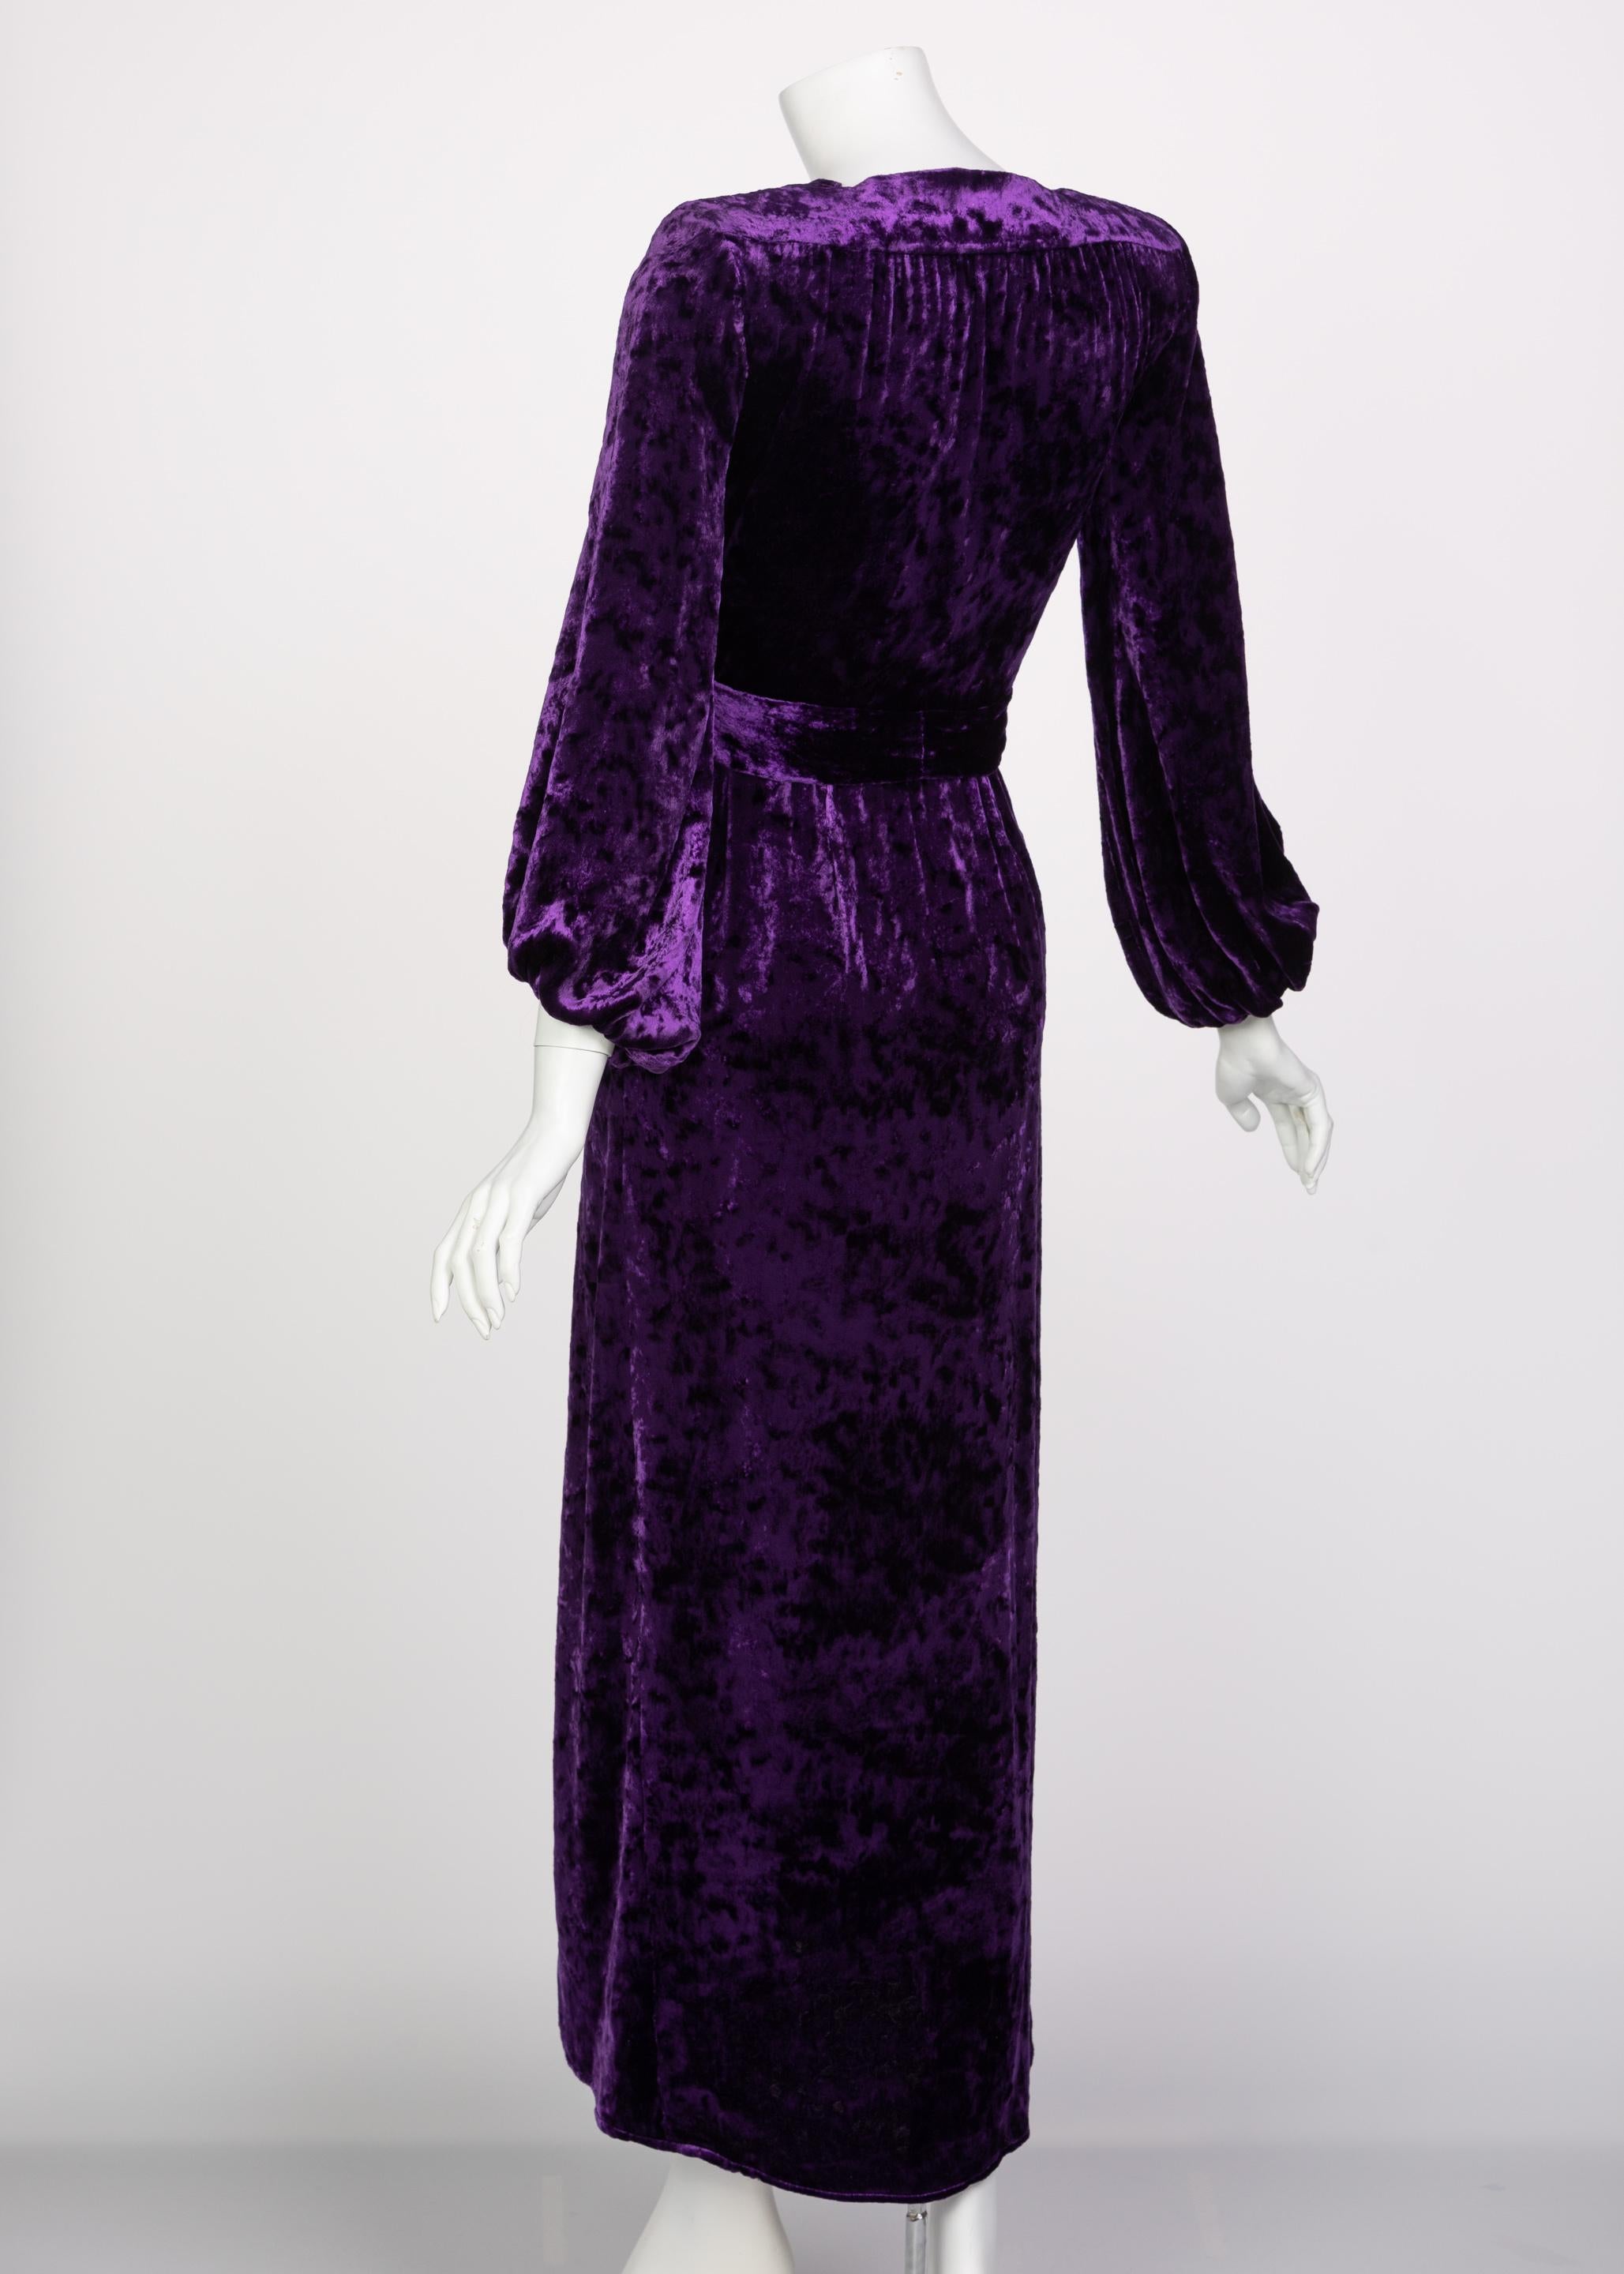 Saint Laurent Purple Crushed Velvet Plunge Wrap Dress YSL Runway, 1985 For Sale 1